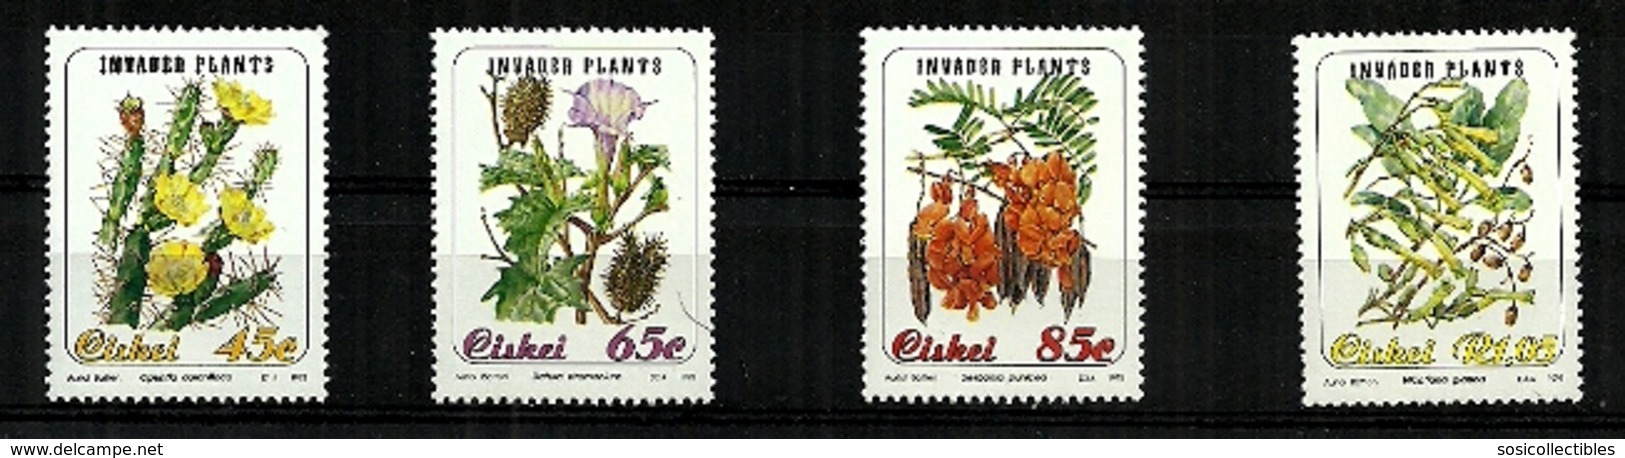 Ciskei - 1993 Invader Plants Full Set Of 4 MNH - Ciskei